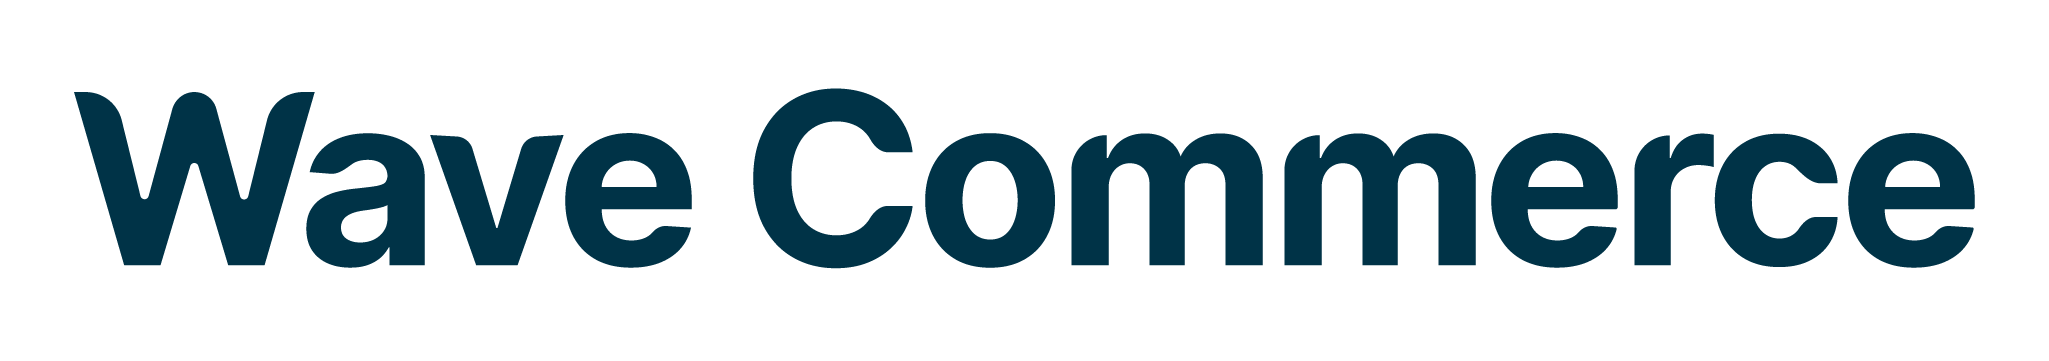 Wave Commerce logo